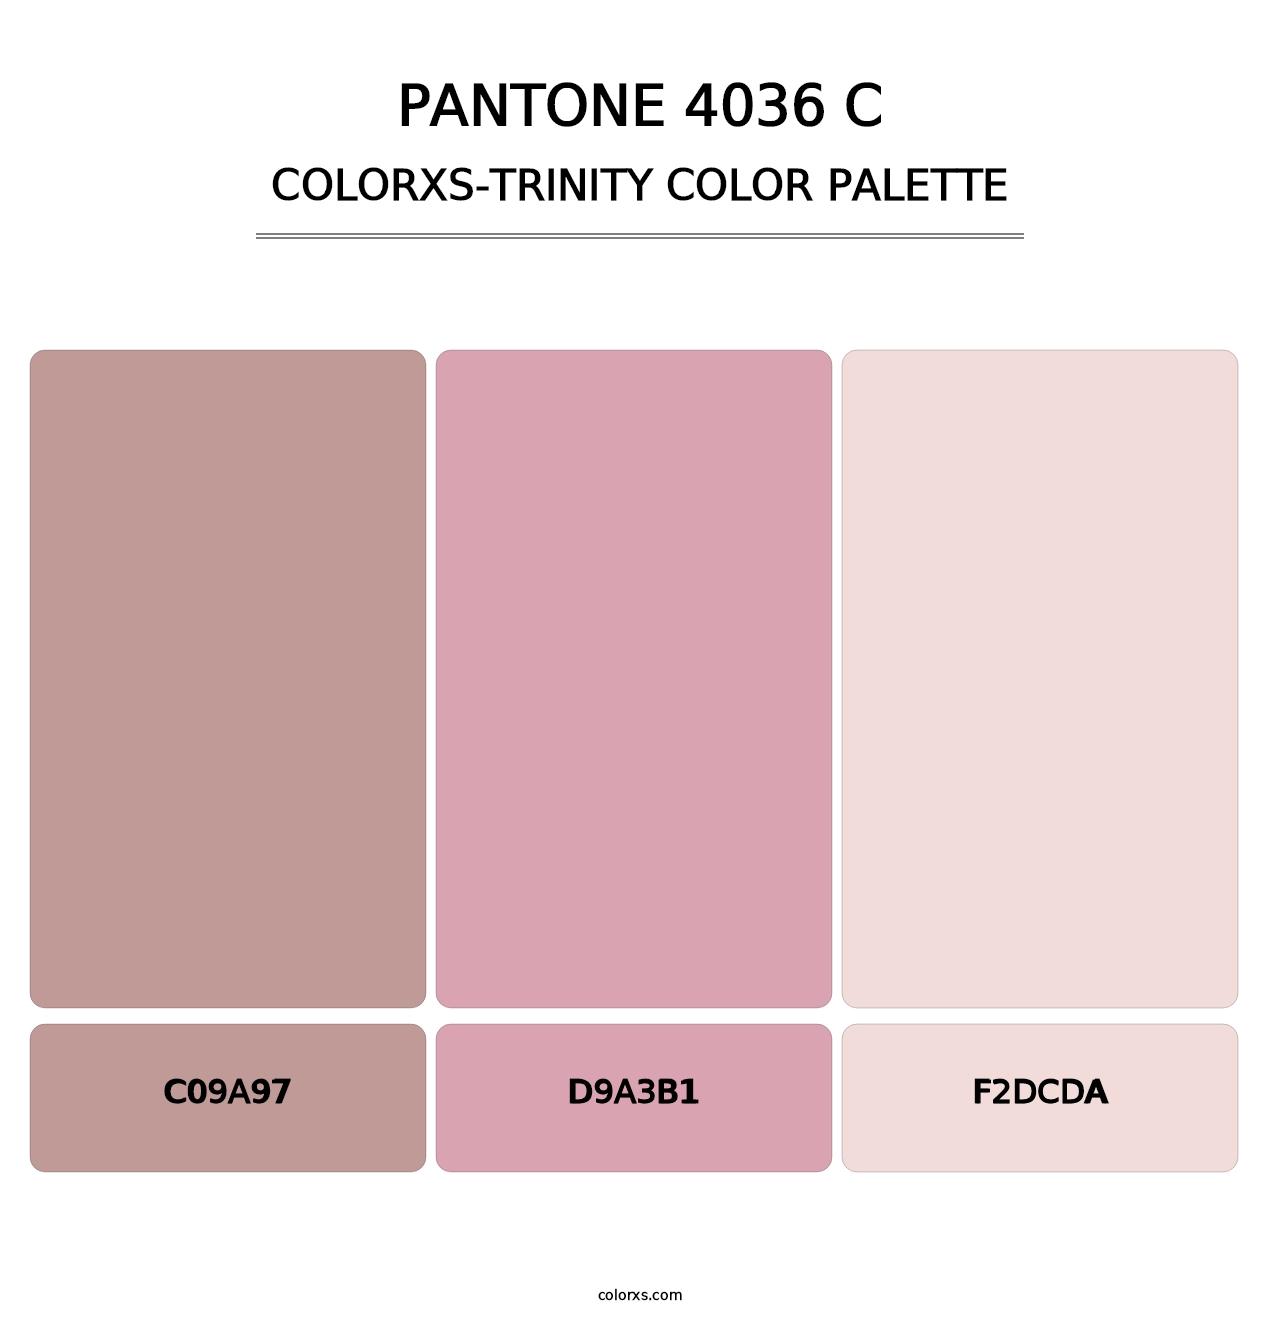 PANTONE 4036 C - Colorxs Trinity Palette